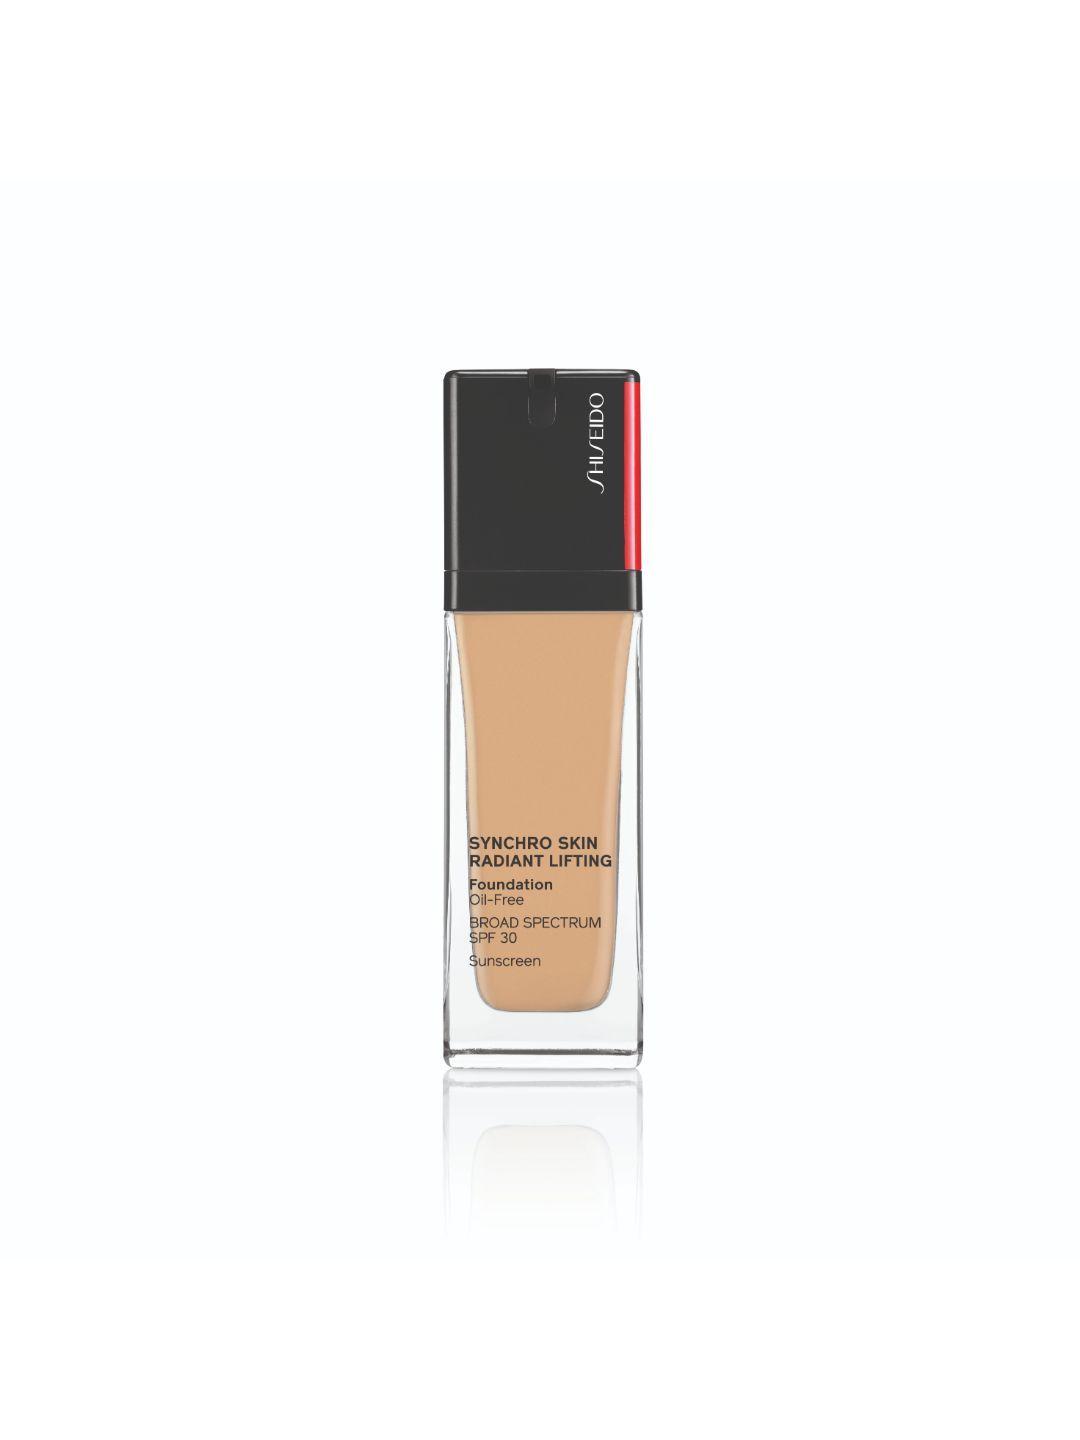 shiseido synchro skin radiant lifting spf 30 foundation 30 ml - pine 320